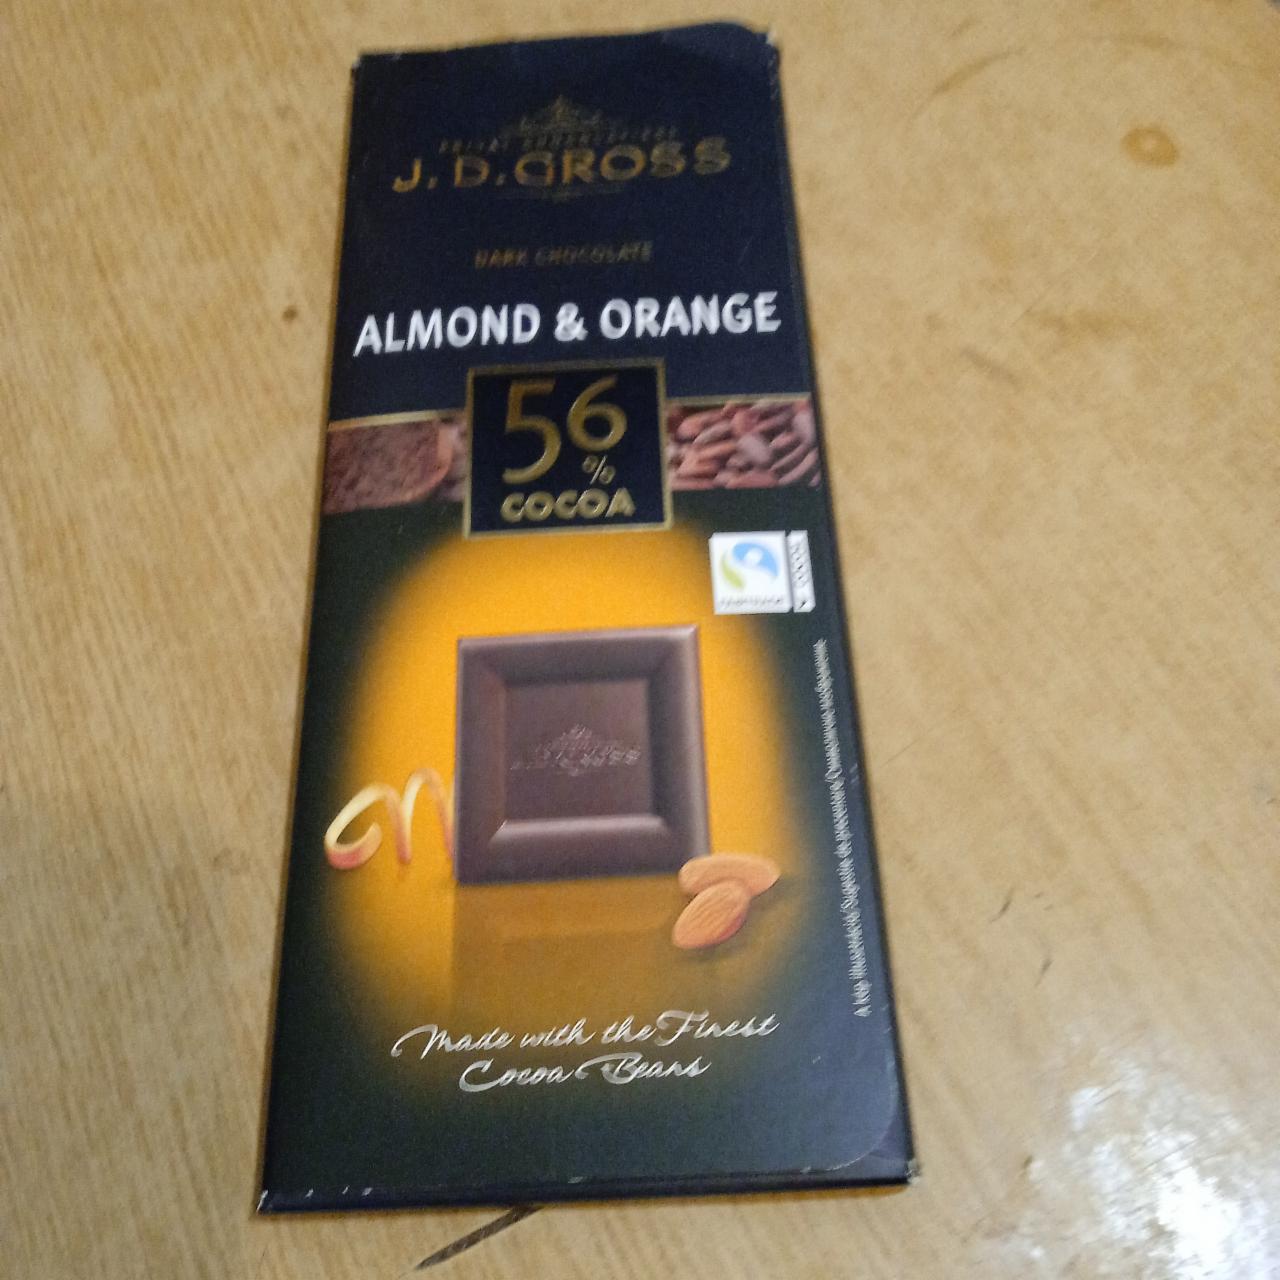 Képek - Almond & orange 56% cocoa J. D. Gross